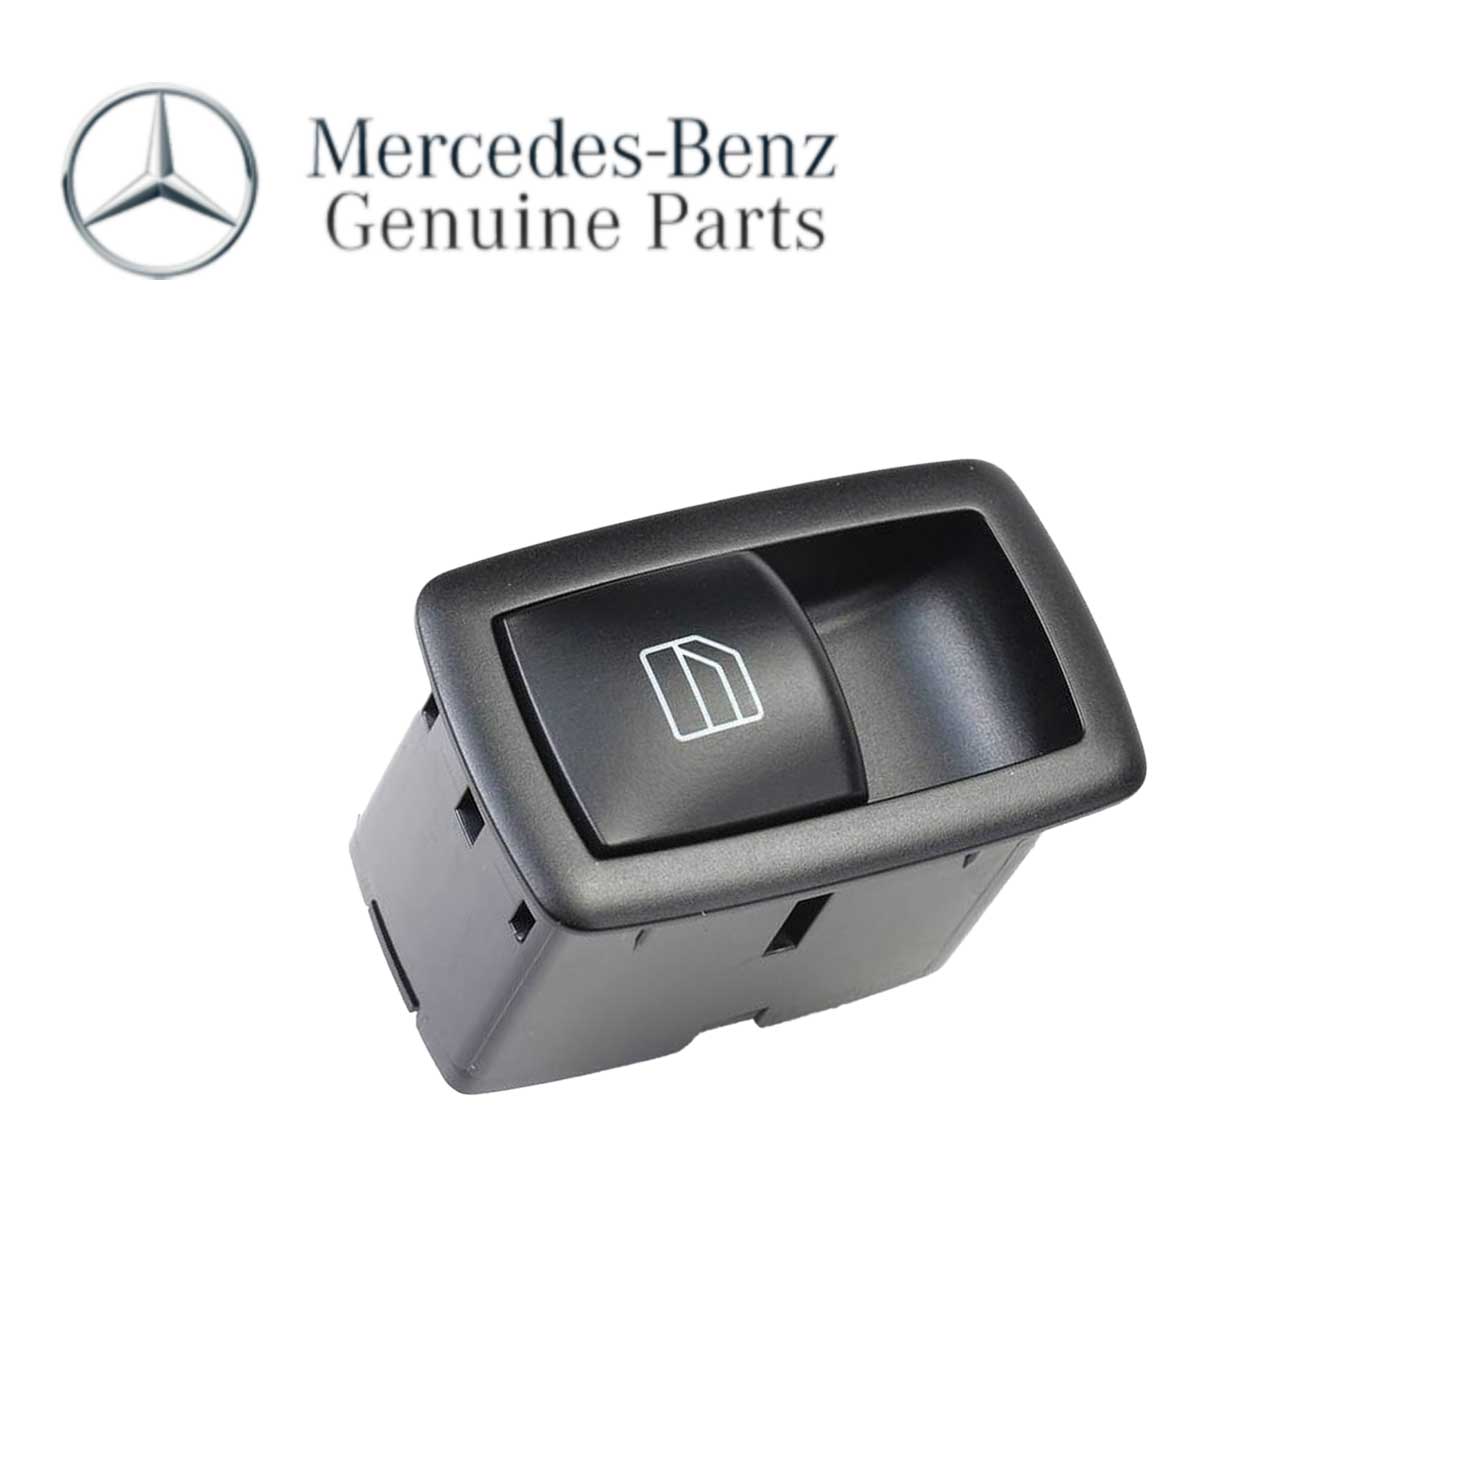 Mercedes Benz Genuine WINDOW SWITCH (Original Parts Without Sticker Level and Neutral Box)k) W164 W251 ML350 ML450 ML550 ML63 AMG 25182005109051